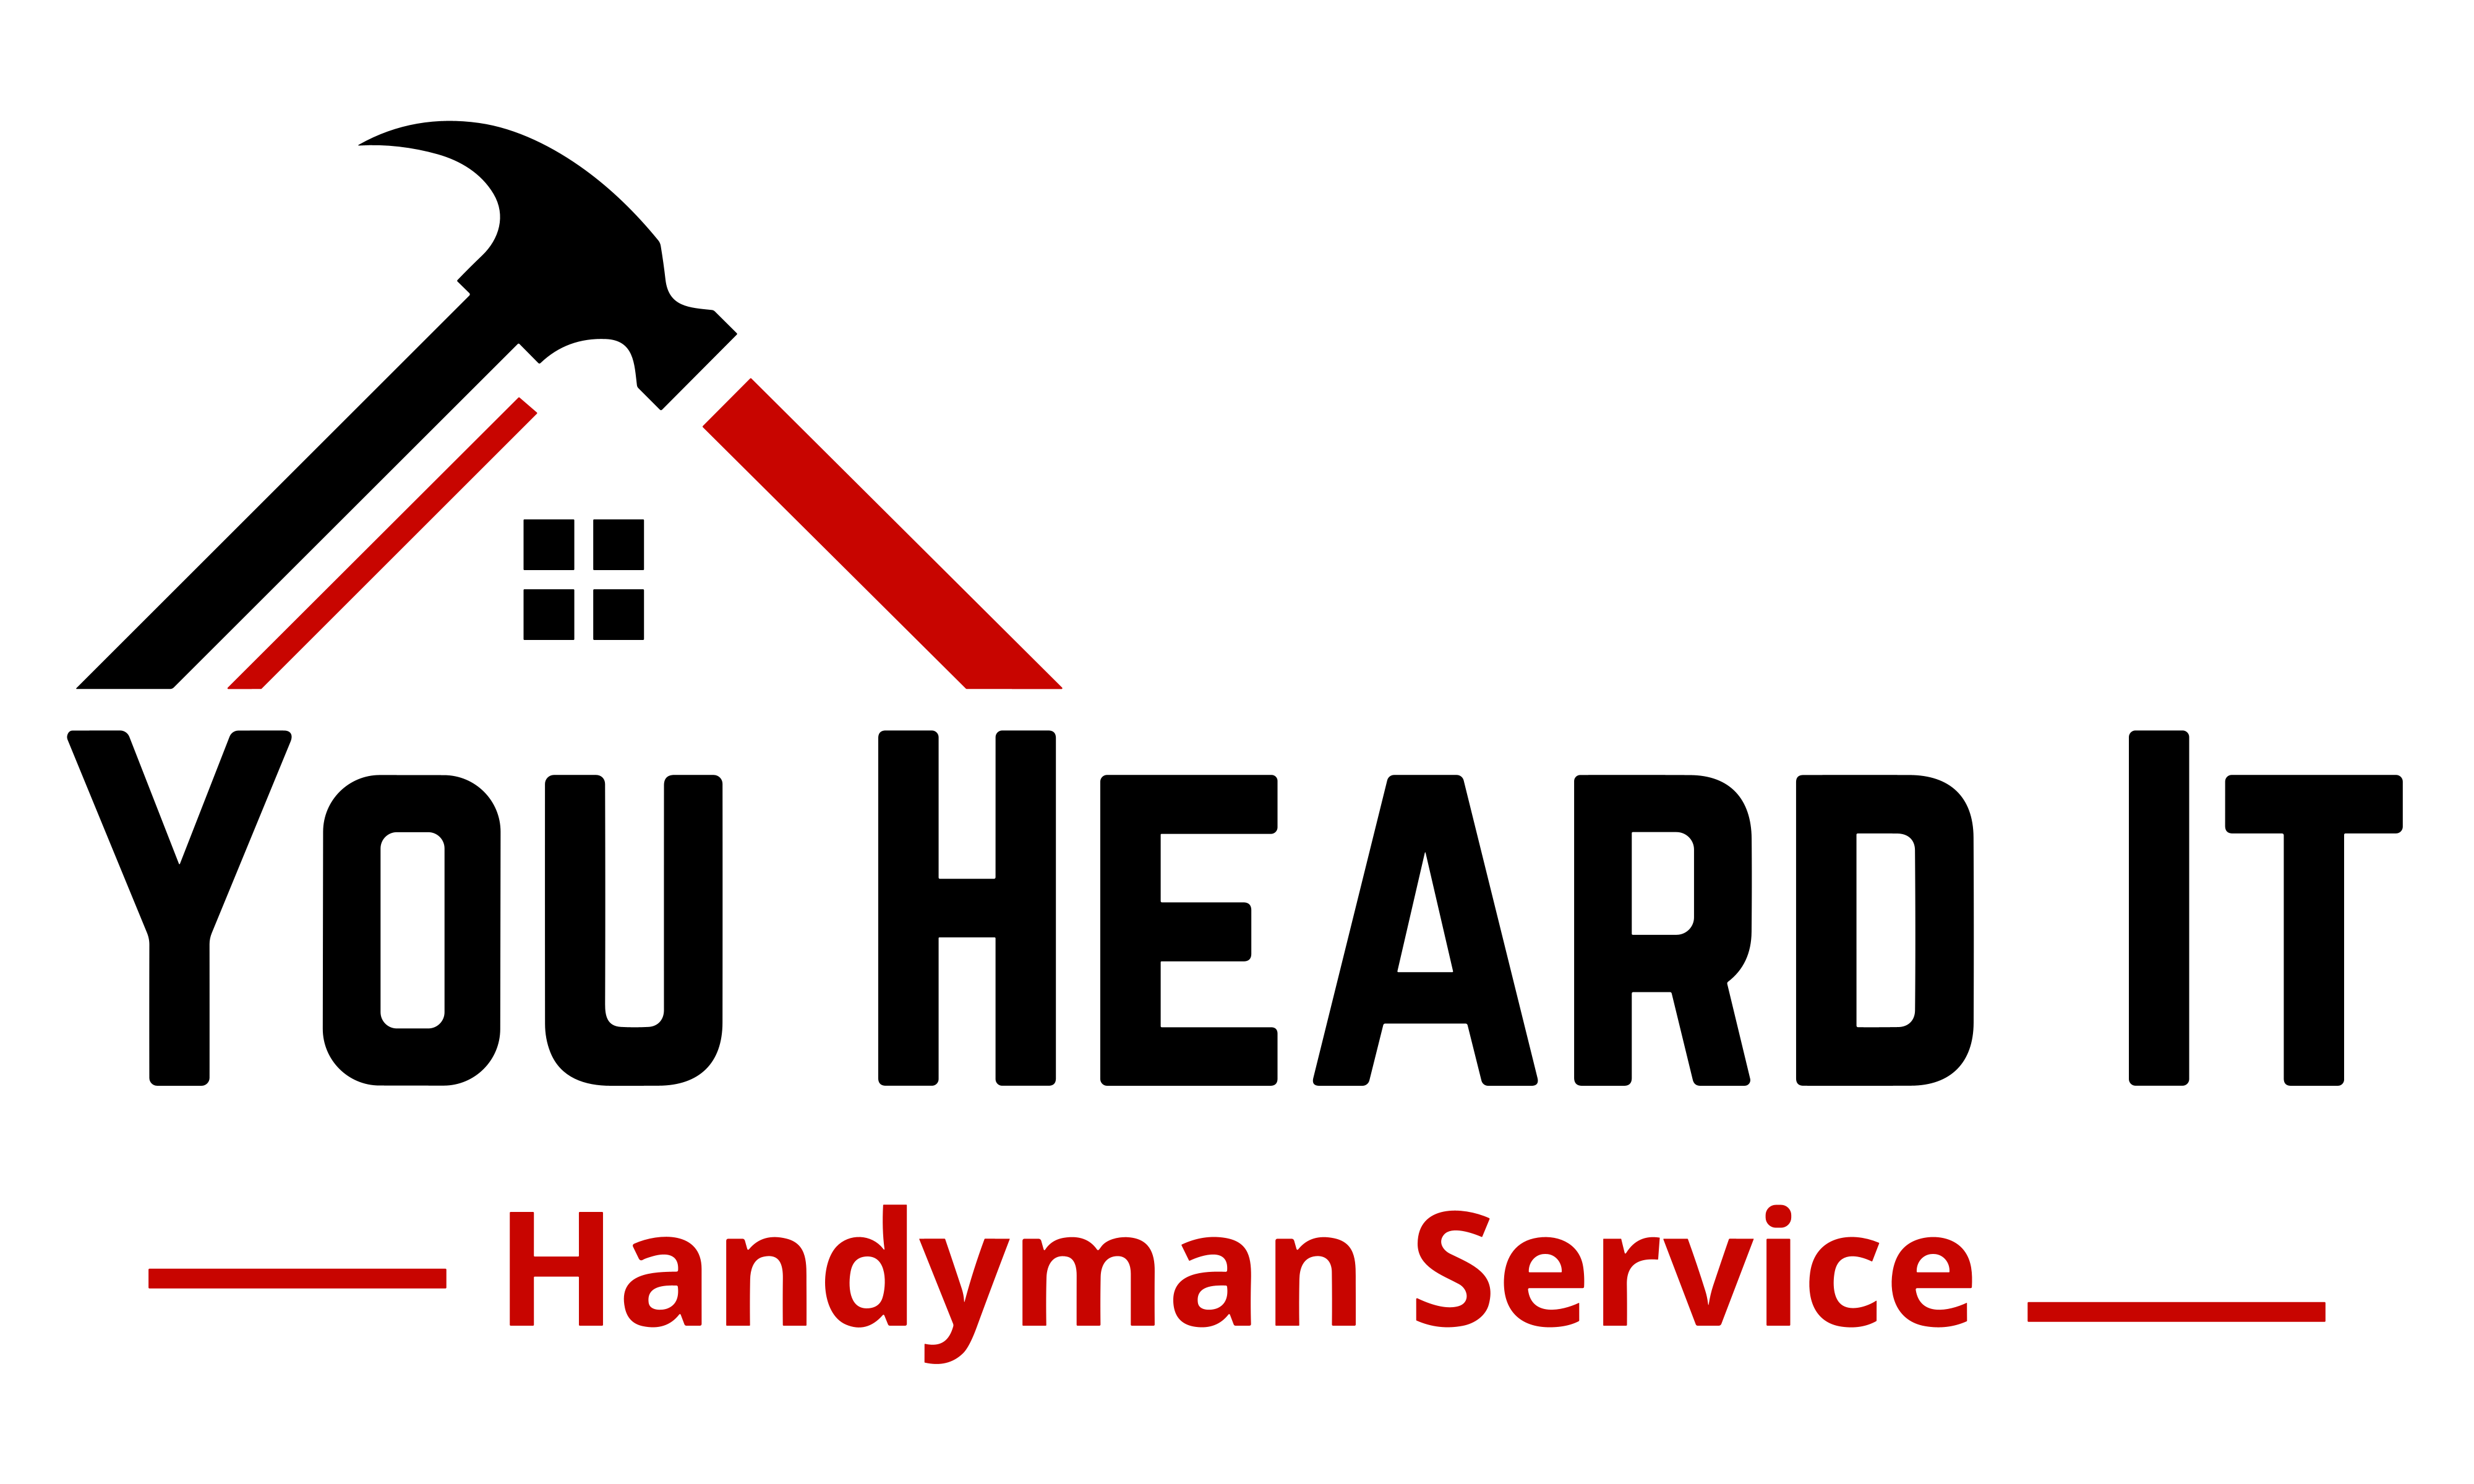 Handyman Service in Fort Worth, TX